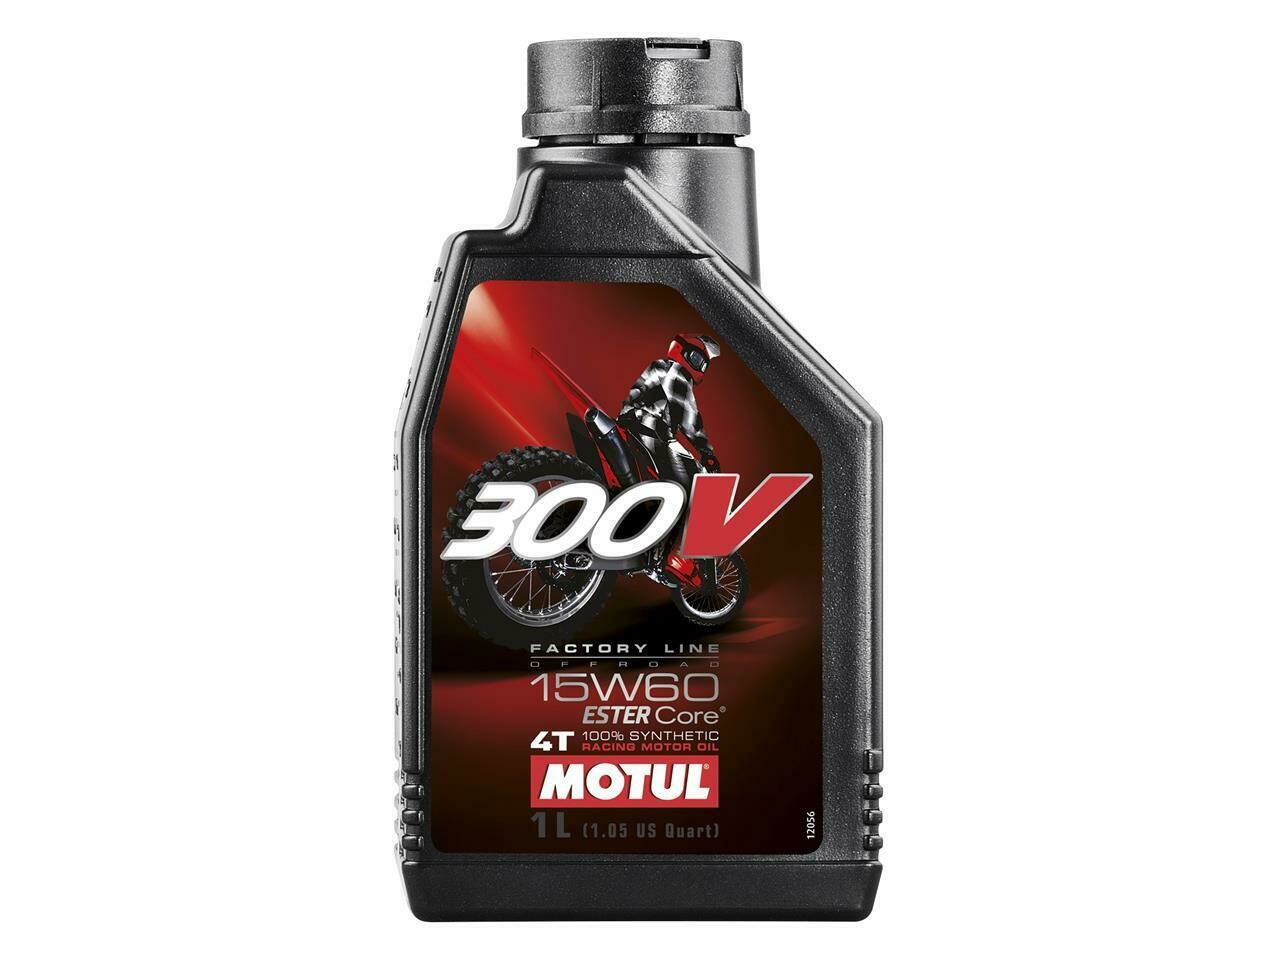 MOTUL 300V factory line off-road racing motorolie 4t 15w60 100% synthetisch 1L